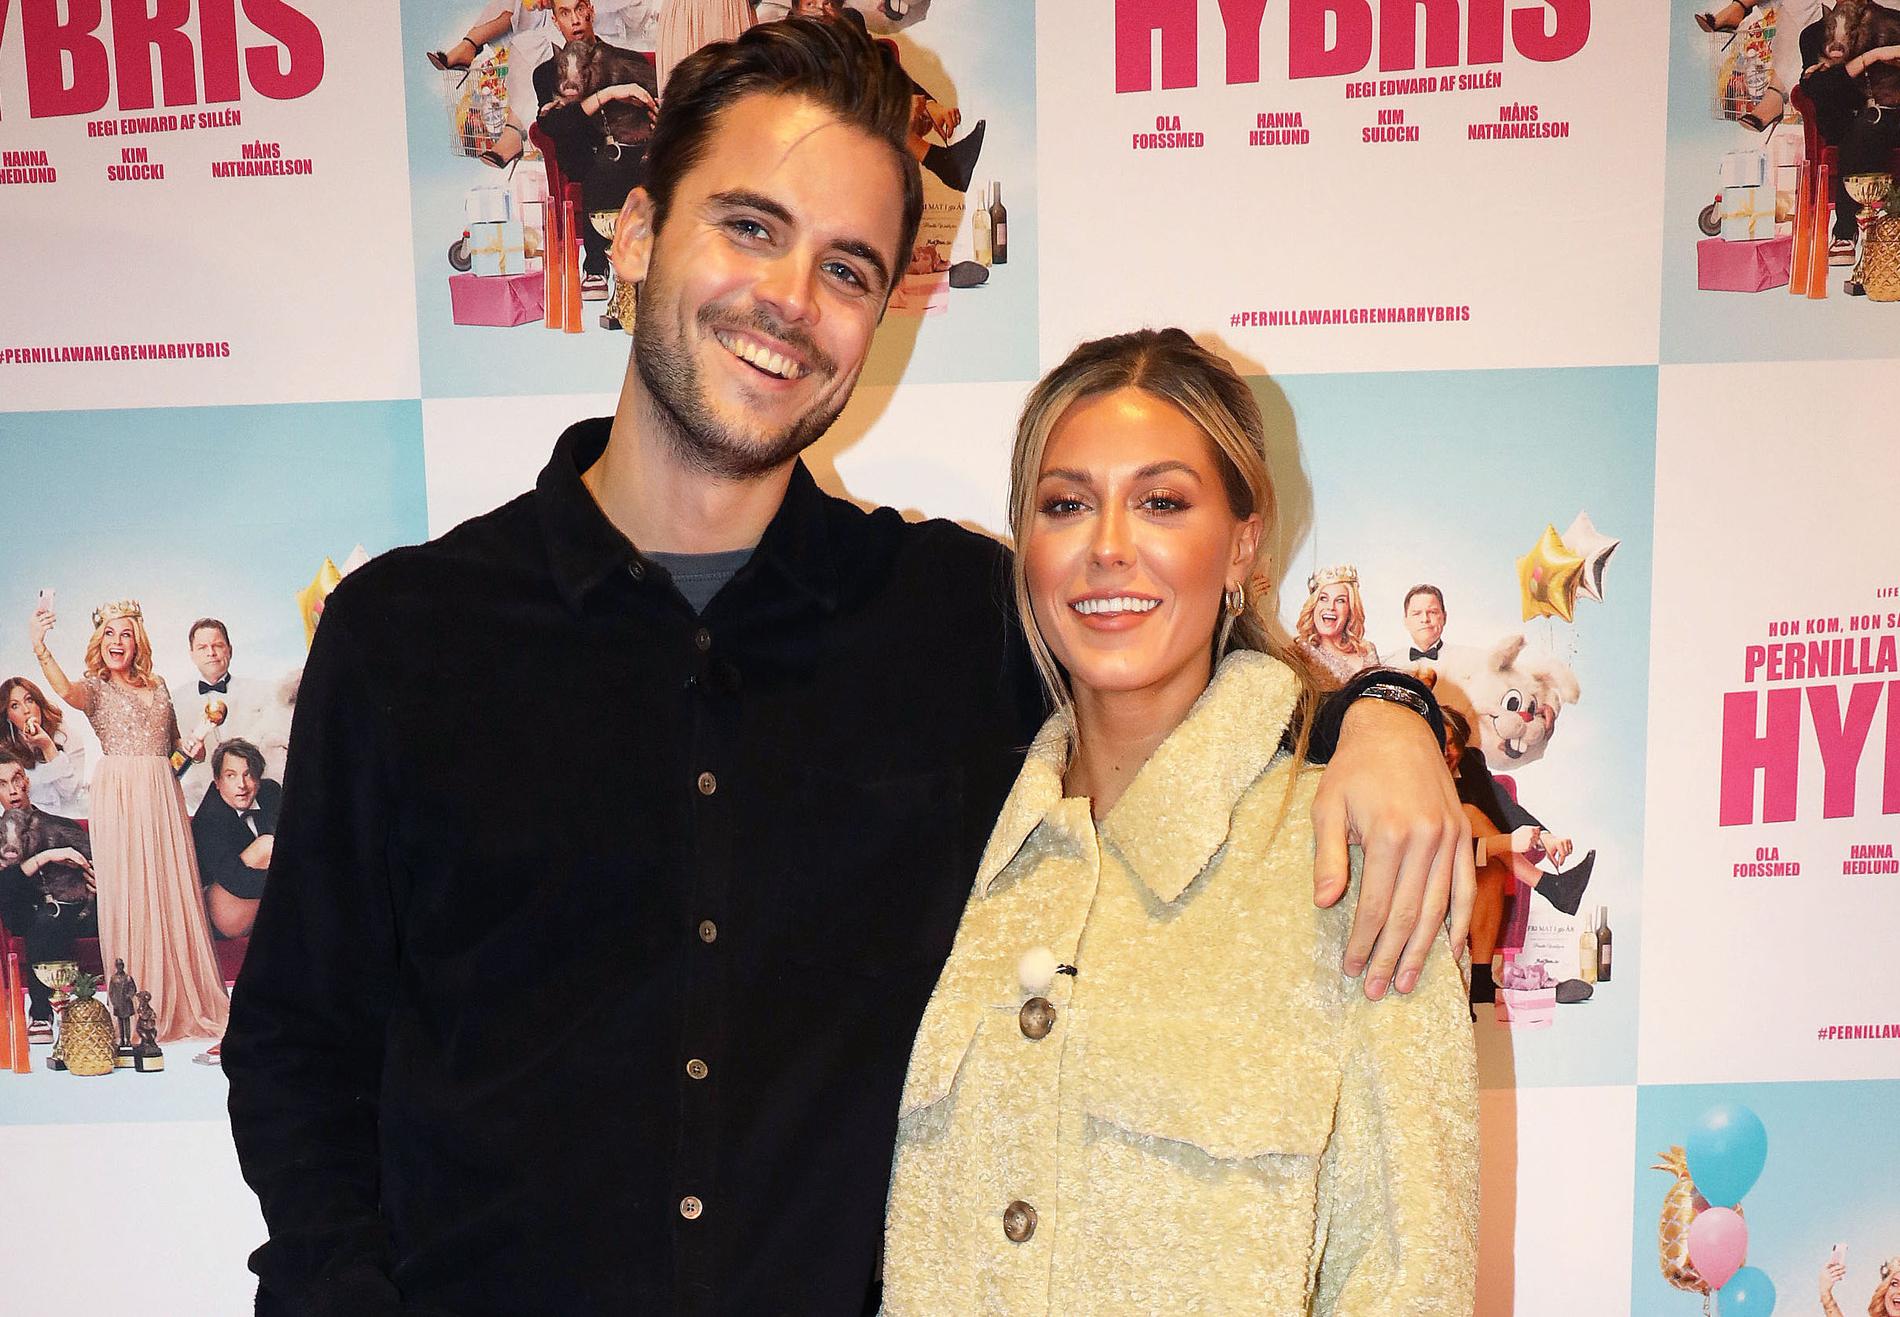 Phillipe Cohen och Bianca Ingrosso på premiären av Pernilla Wahlgrens show ”Hybris”.